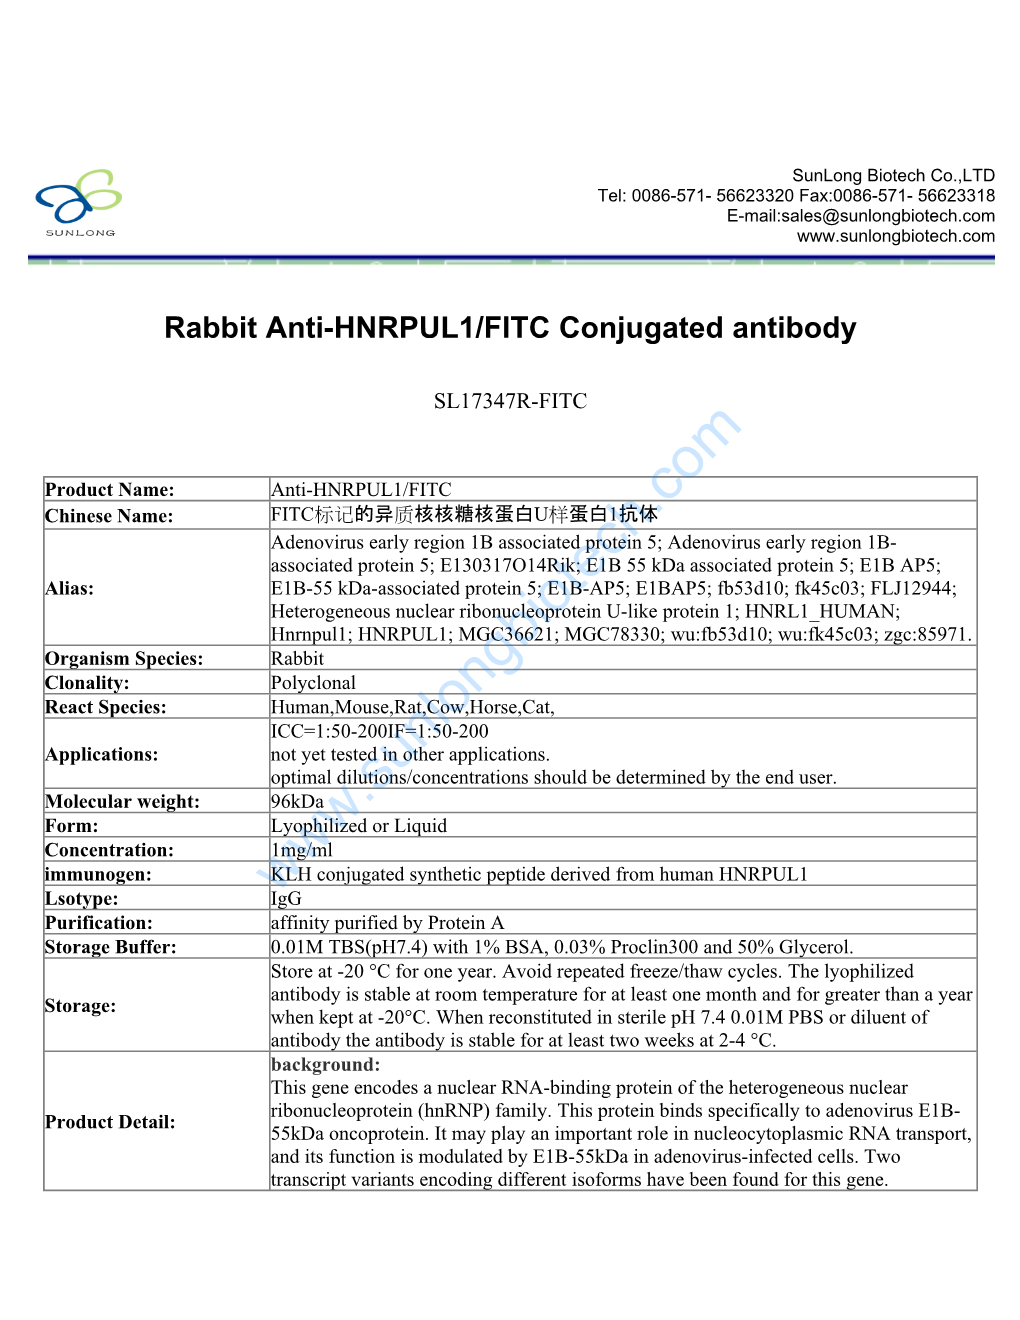 Rabbit Anti-HNRPUL1/FITC Conjugated Antibody-SL17347R